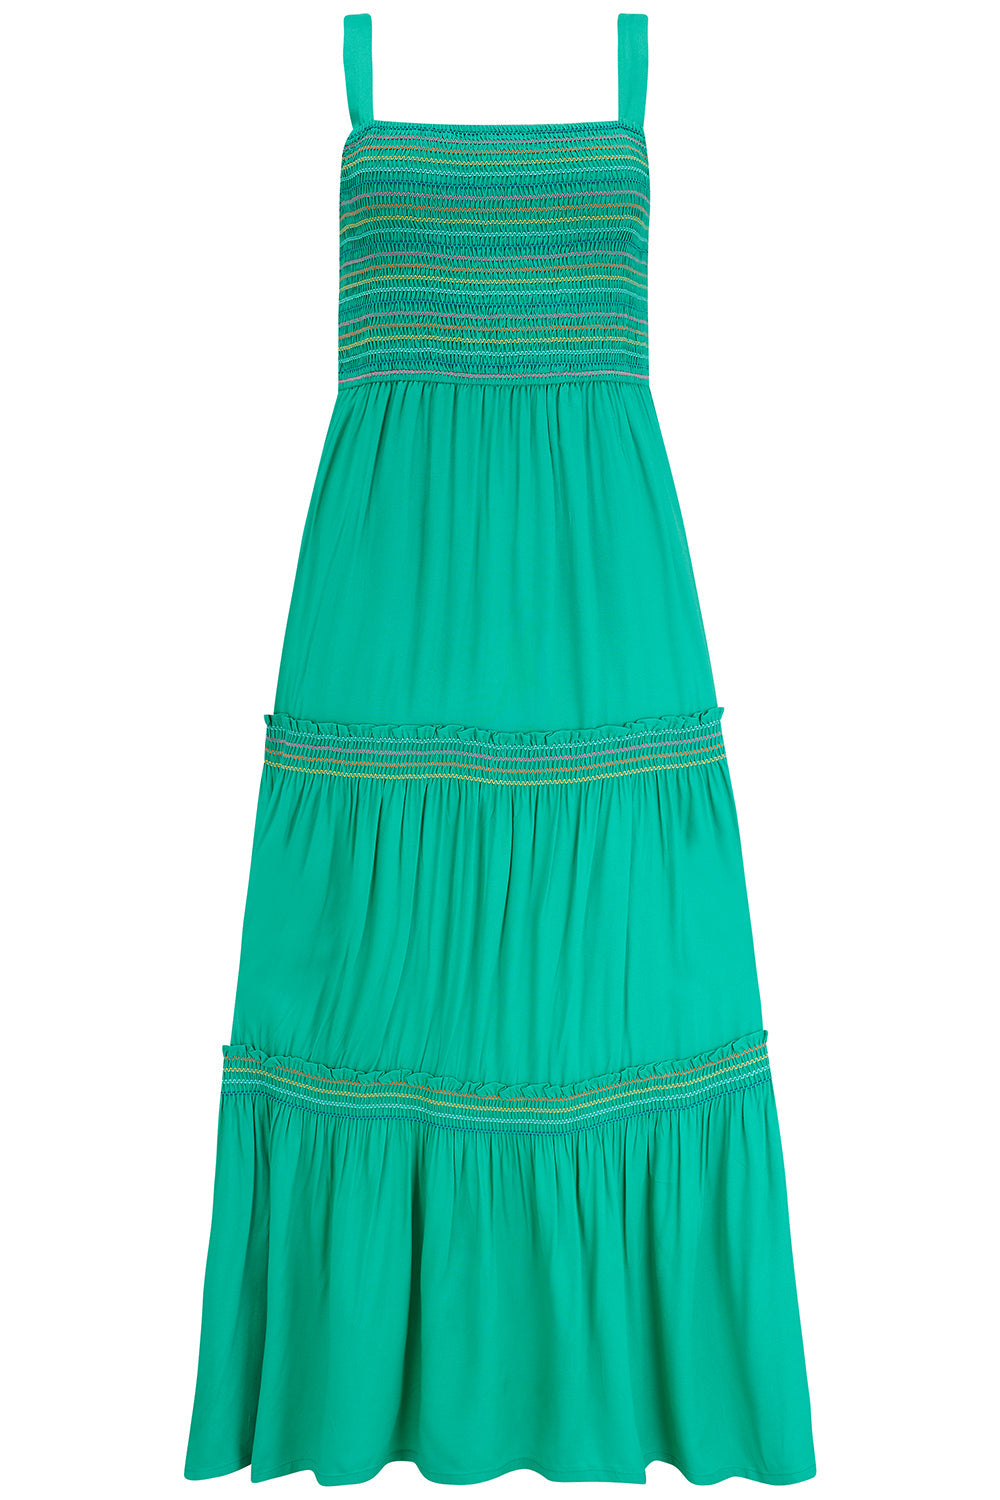 Roxy Green Dress D1096